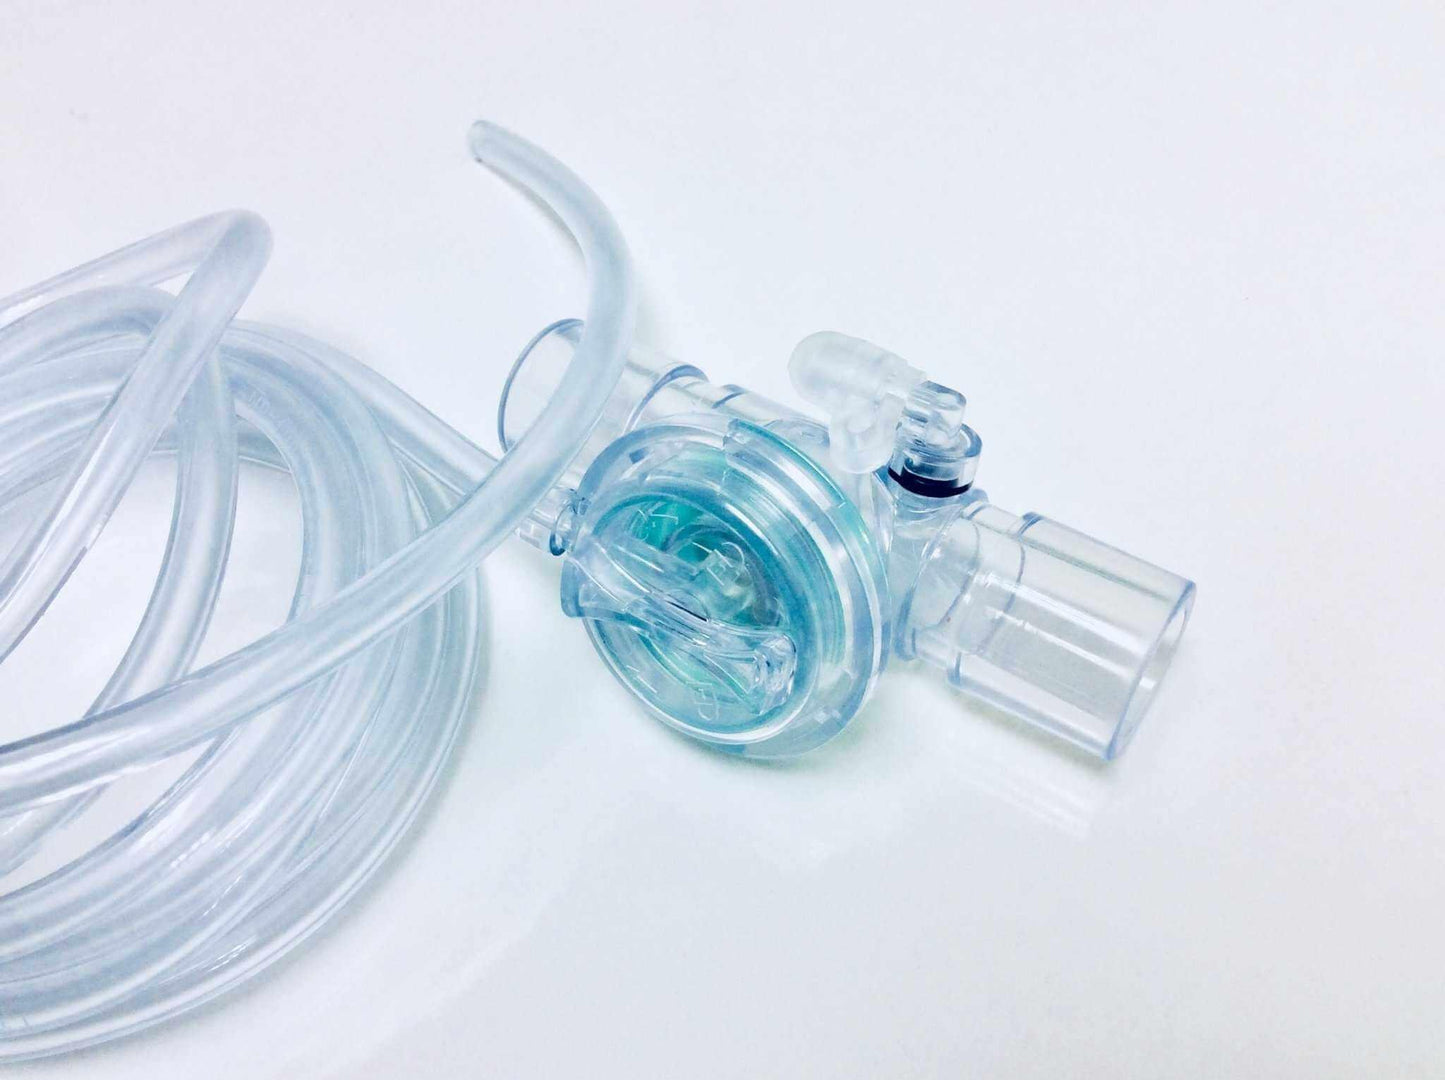 NEW Philips Respironics Active Exhalation Valve UPB Kit 1075459 FREE Shipping - MBR Medicals